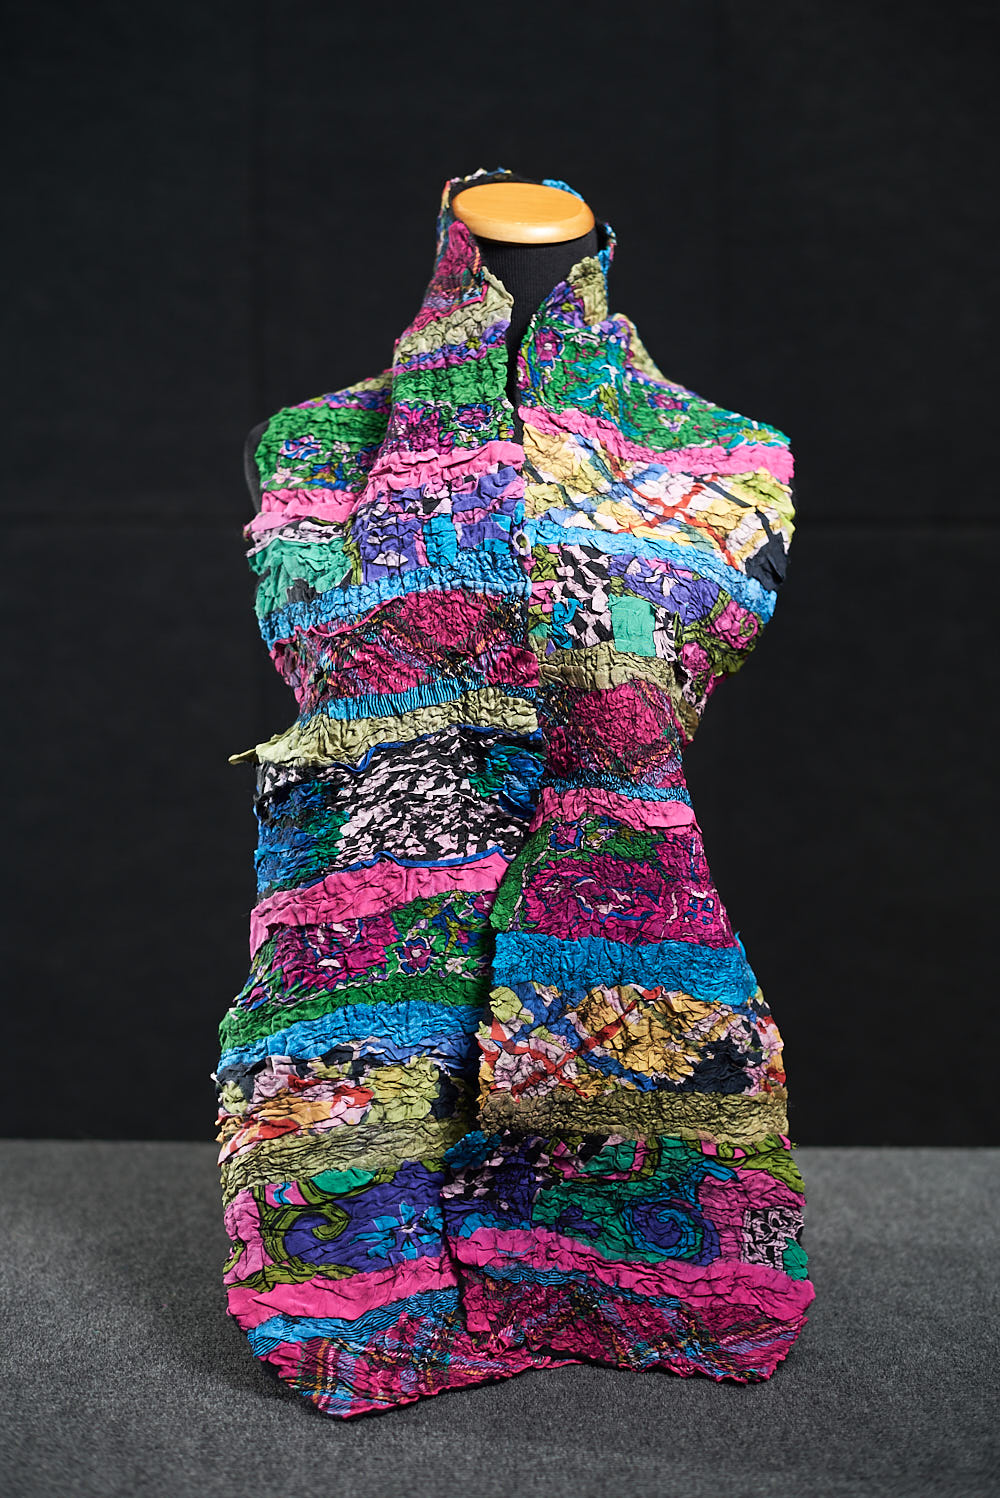 Hand crafted nuno fiber art created by Melinda LaBarge